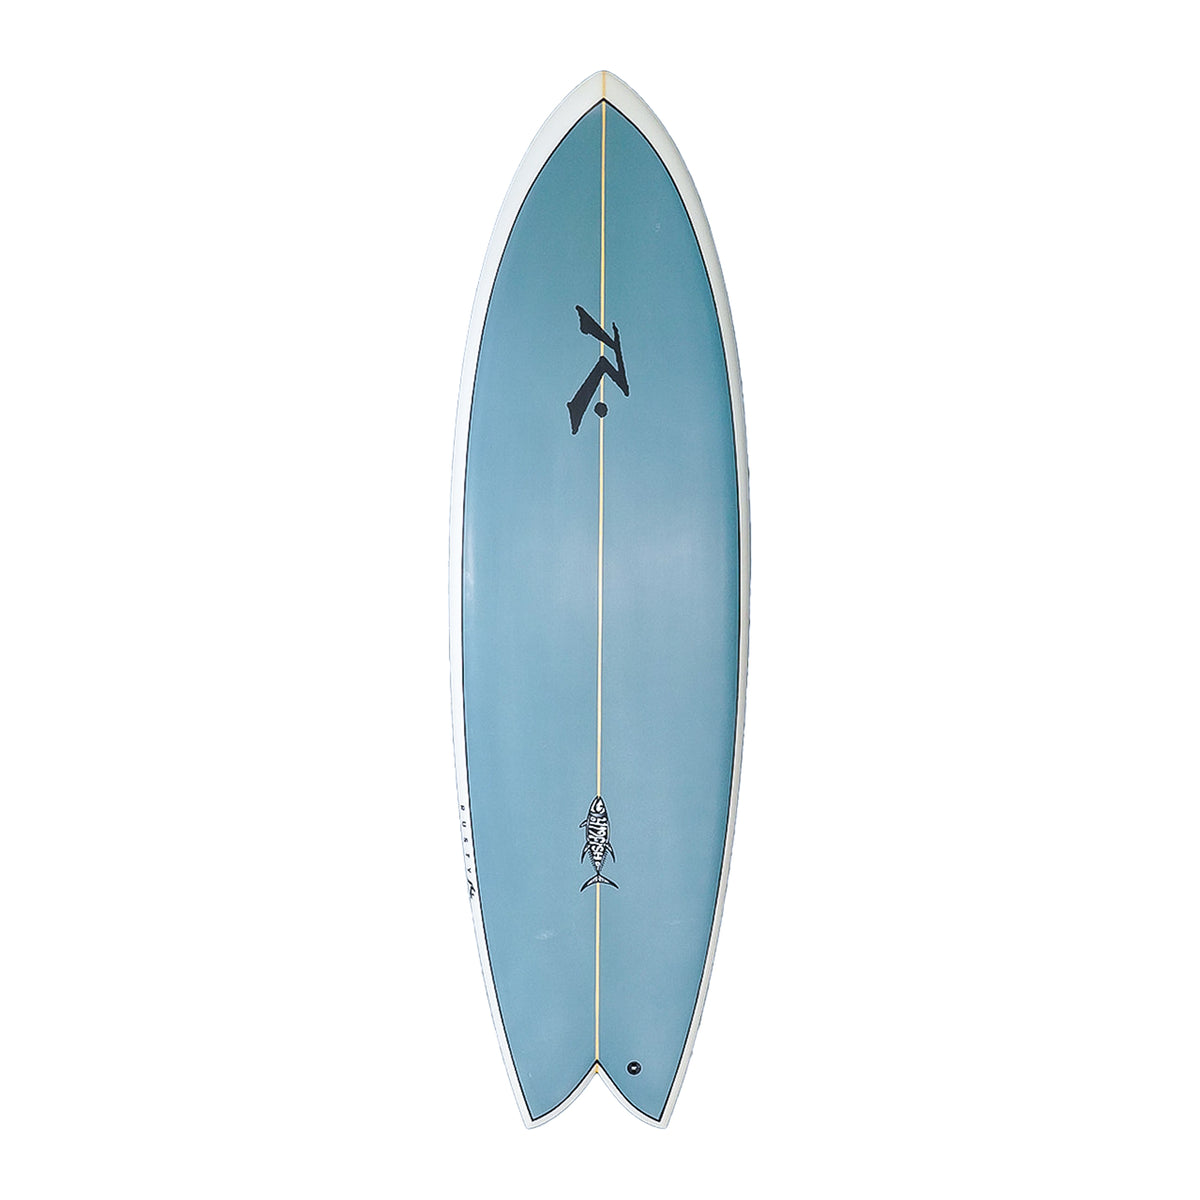 419fish - Alternative - Rusty Surfboards - Top View - Light Blue